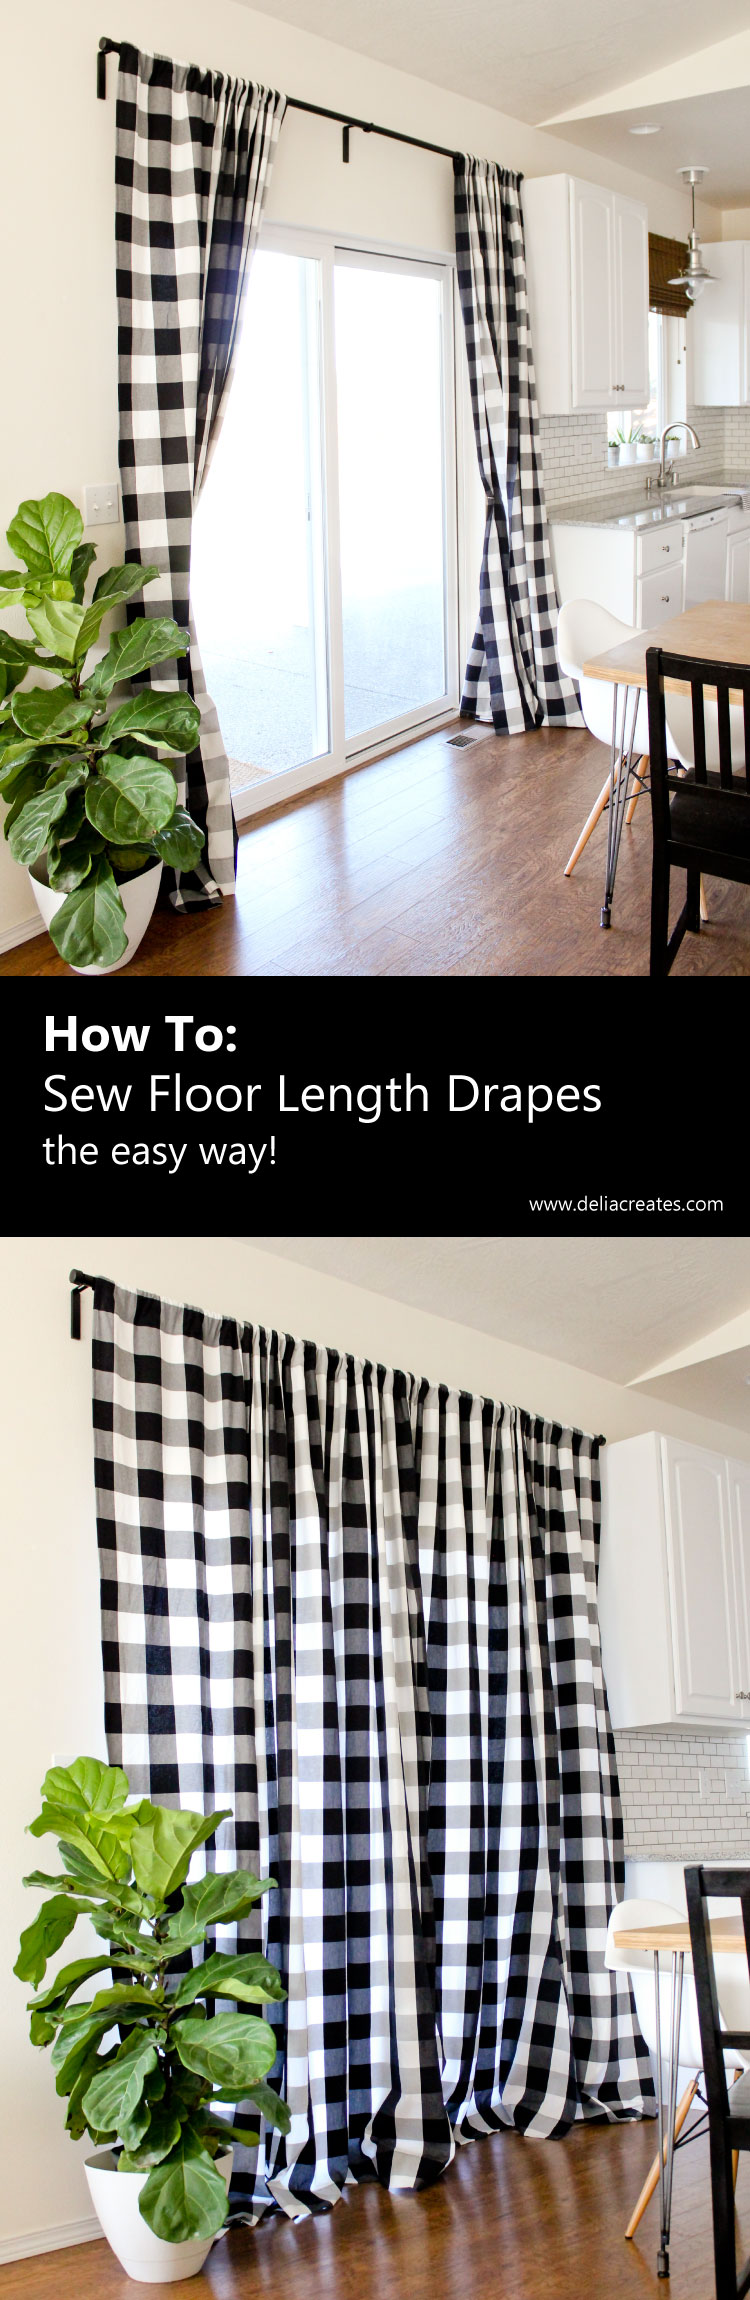 How To Sew Floor Length Drapes - the easy way! // www.deliacreates.com